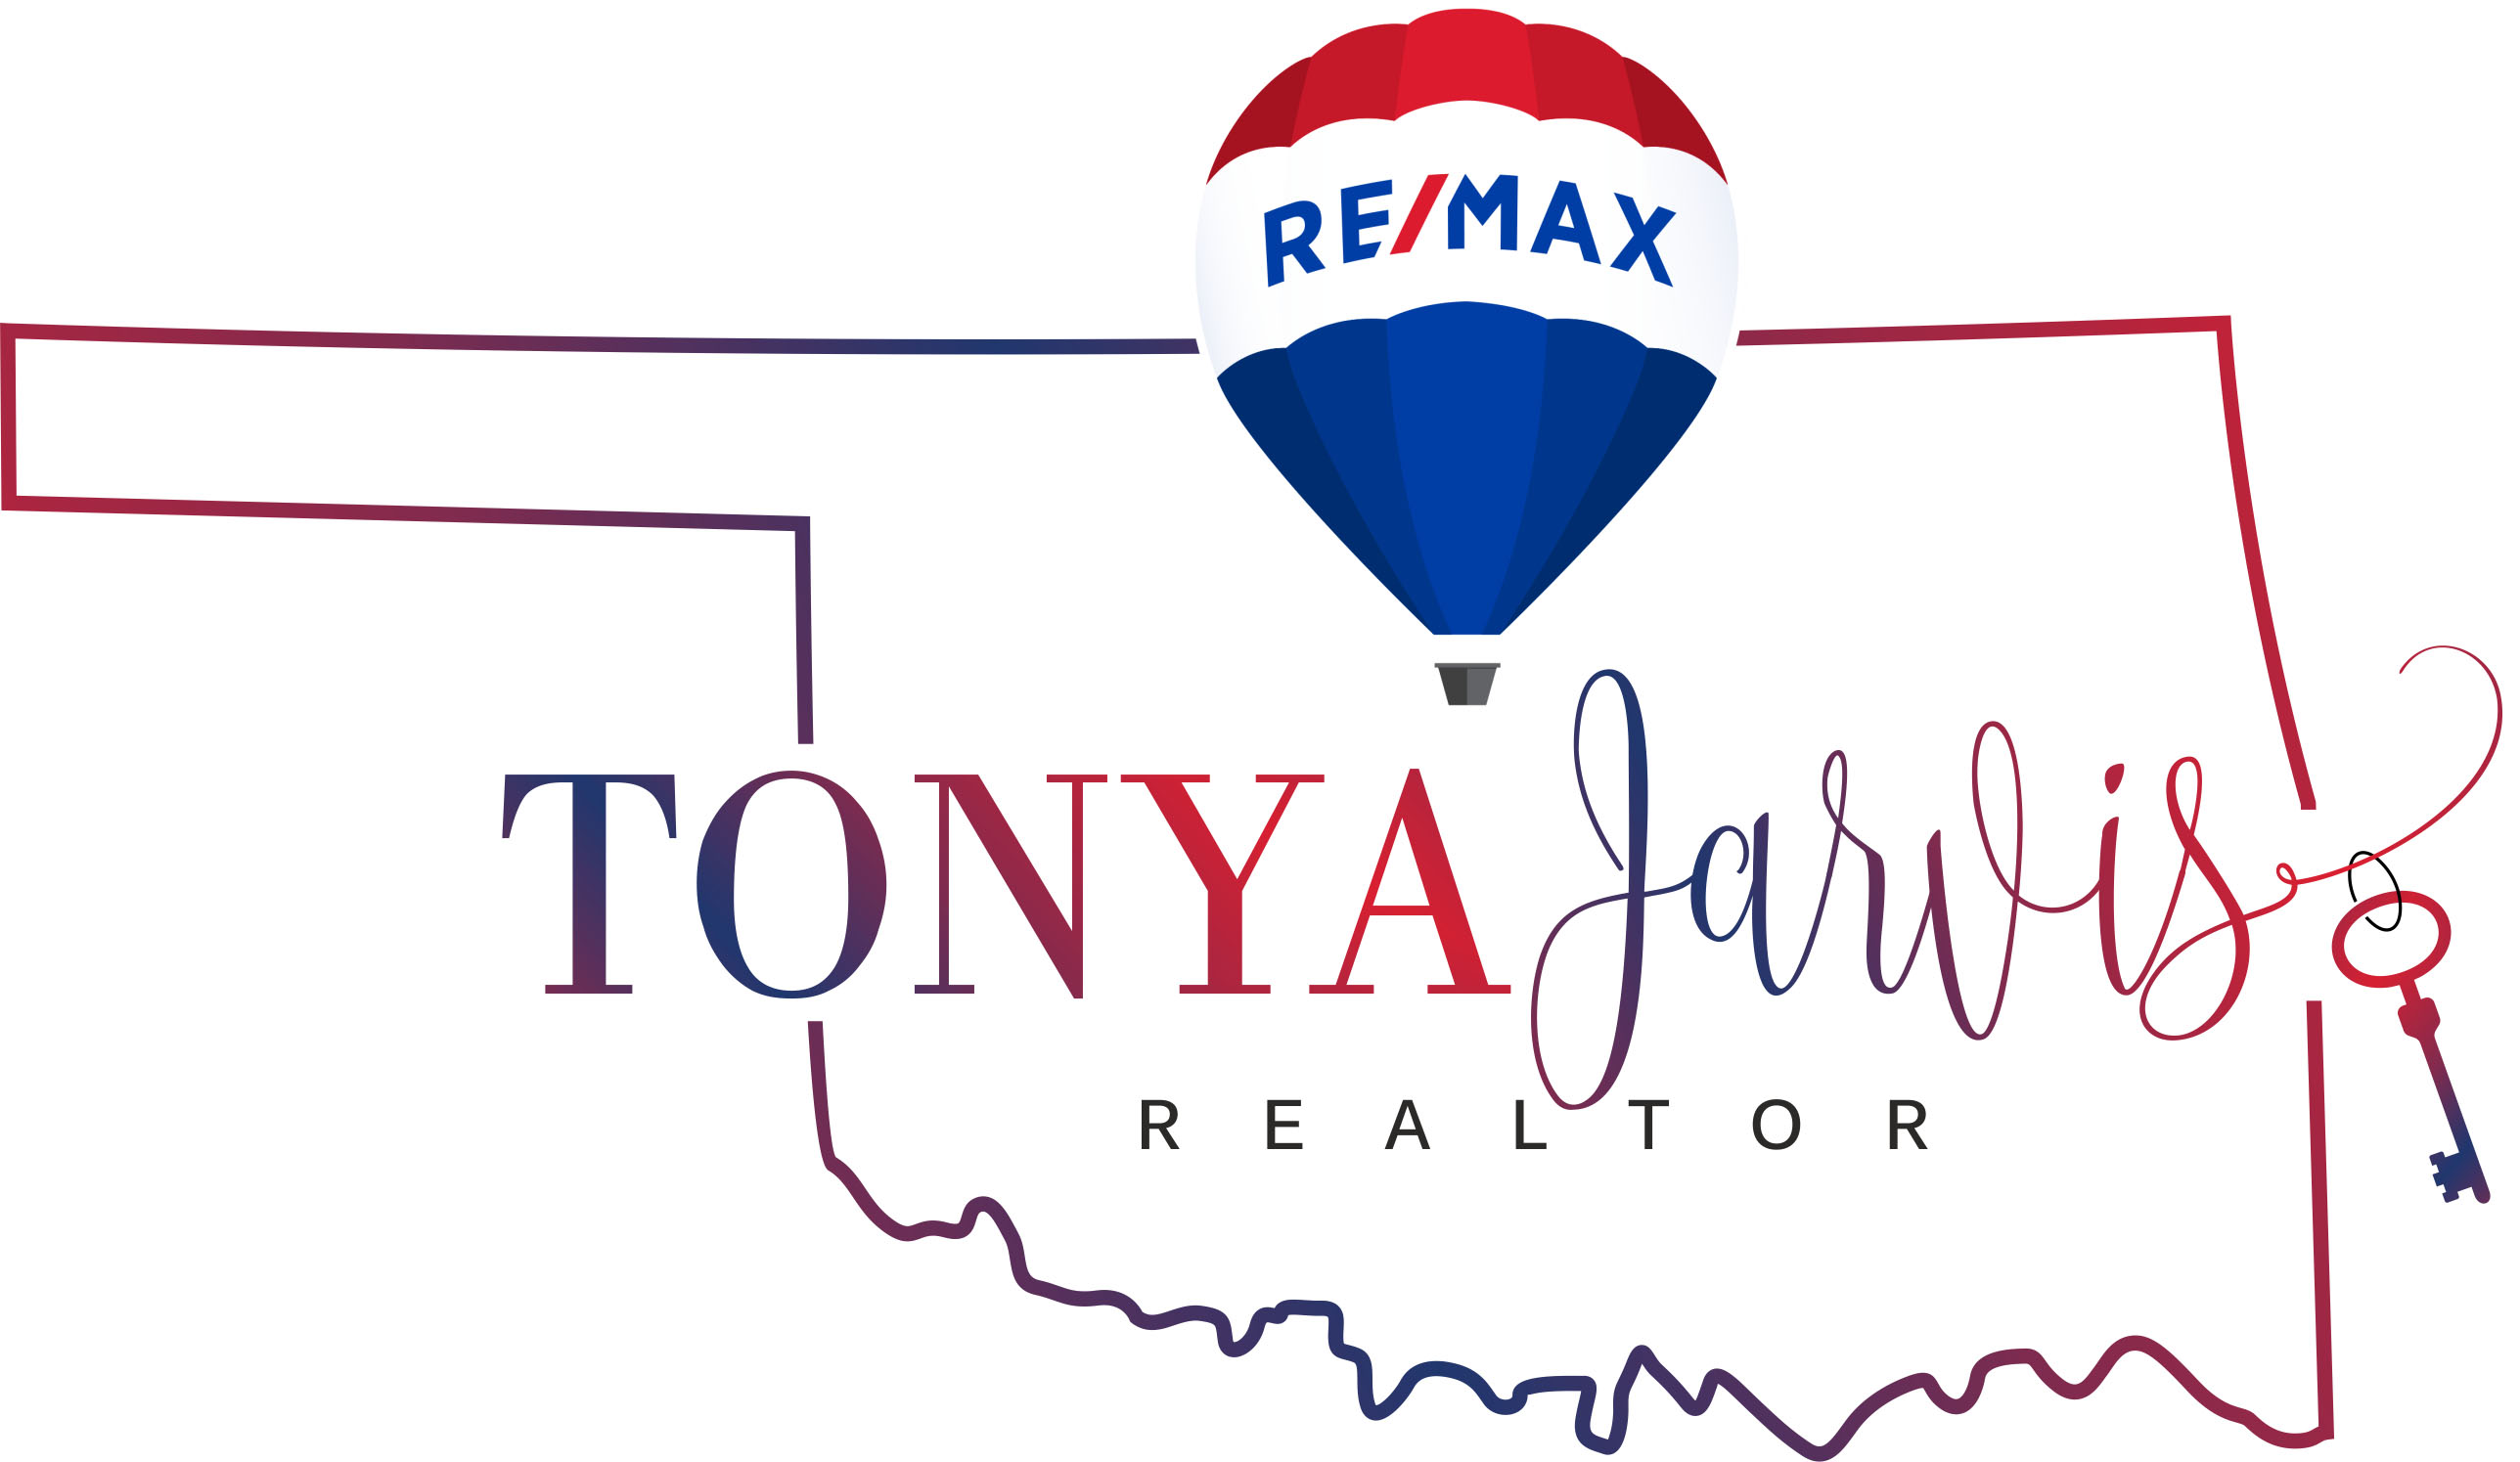 RE/MAX, Tonya Jarvis company logo